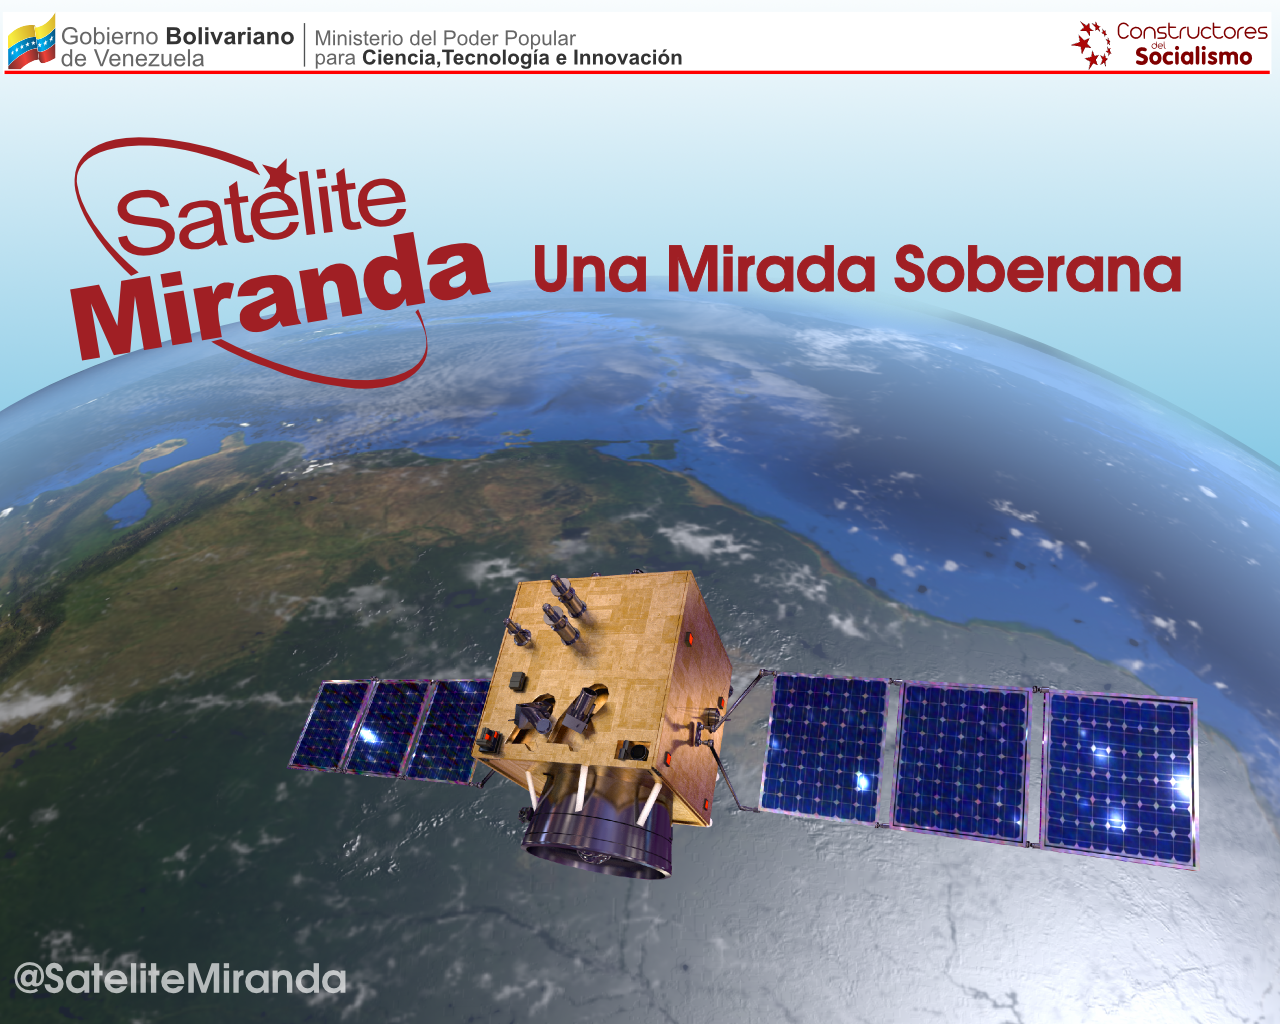 SateliteMiranda-twitter